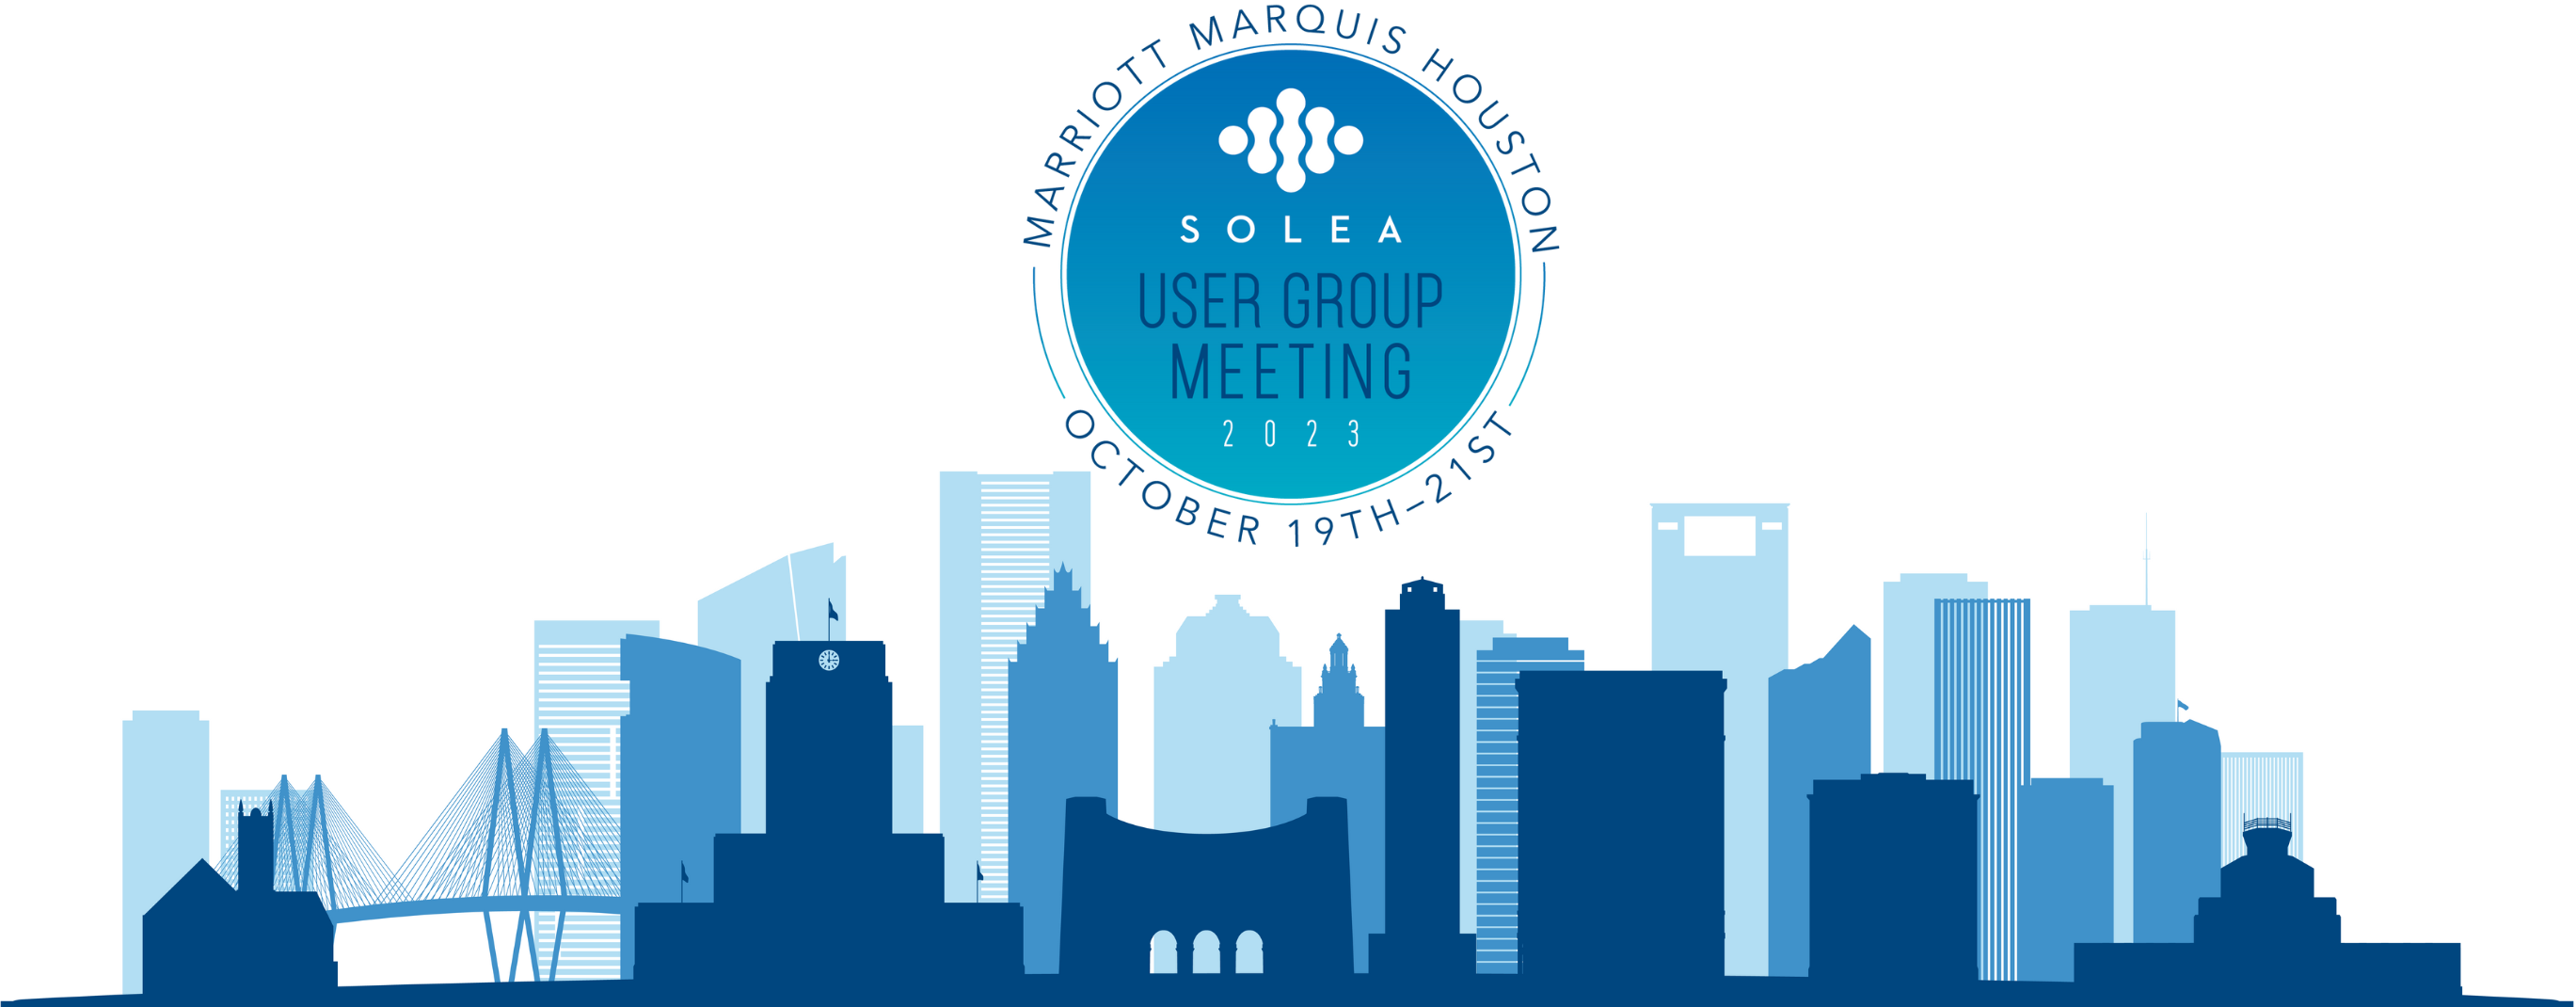 Solea User Group Meeting | SUGM